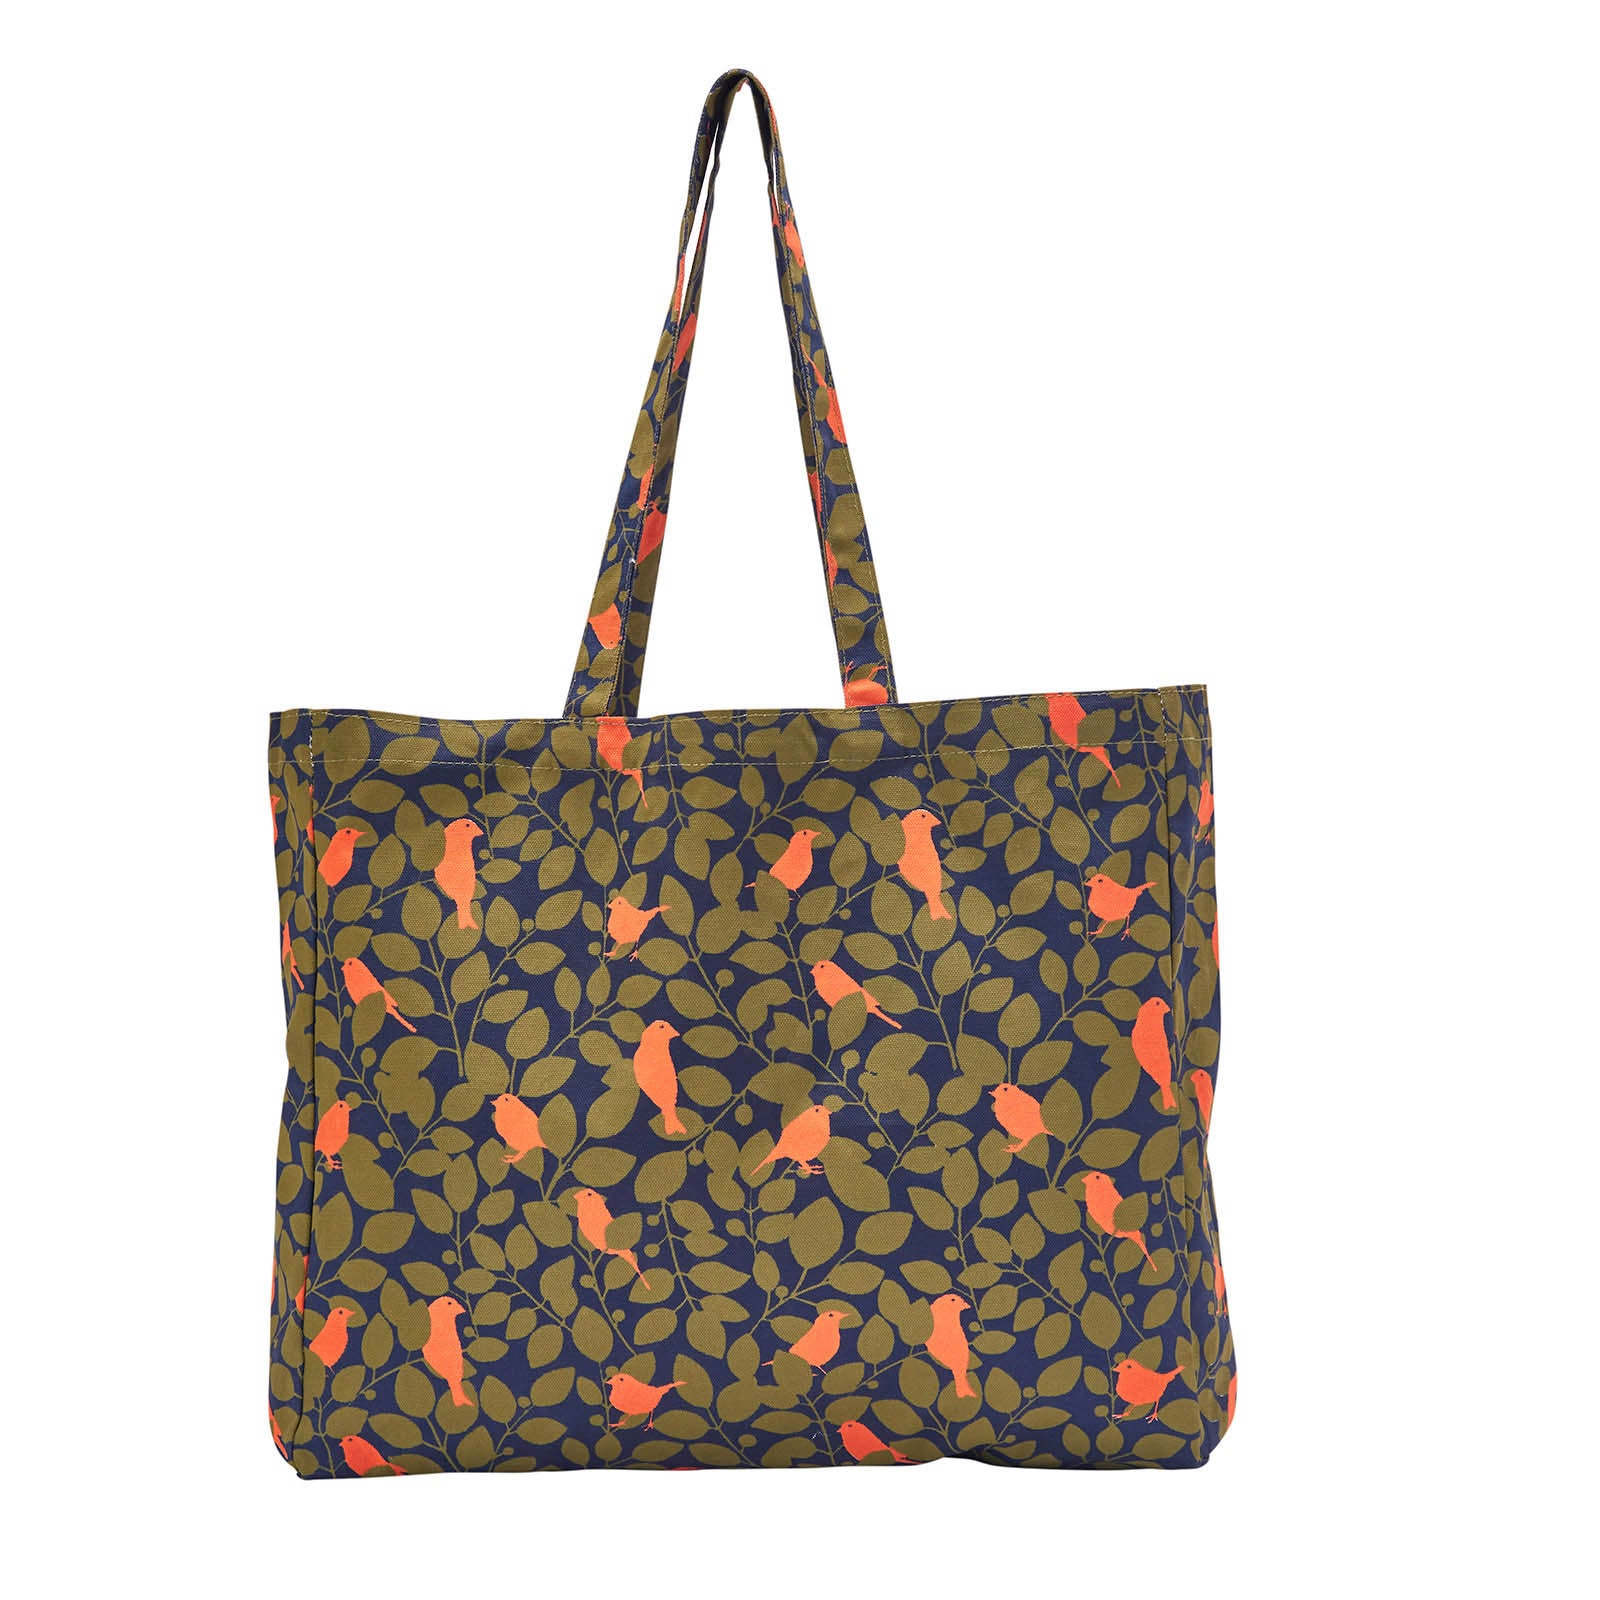 Finches Little Shopper Tote Bag Tote - rockflowerpaper